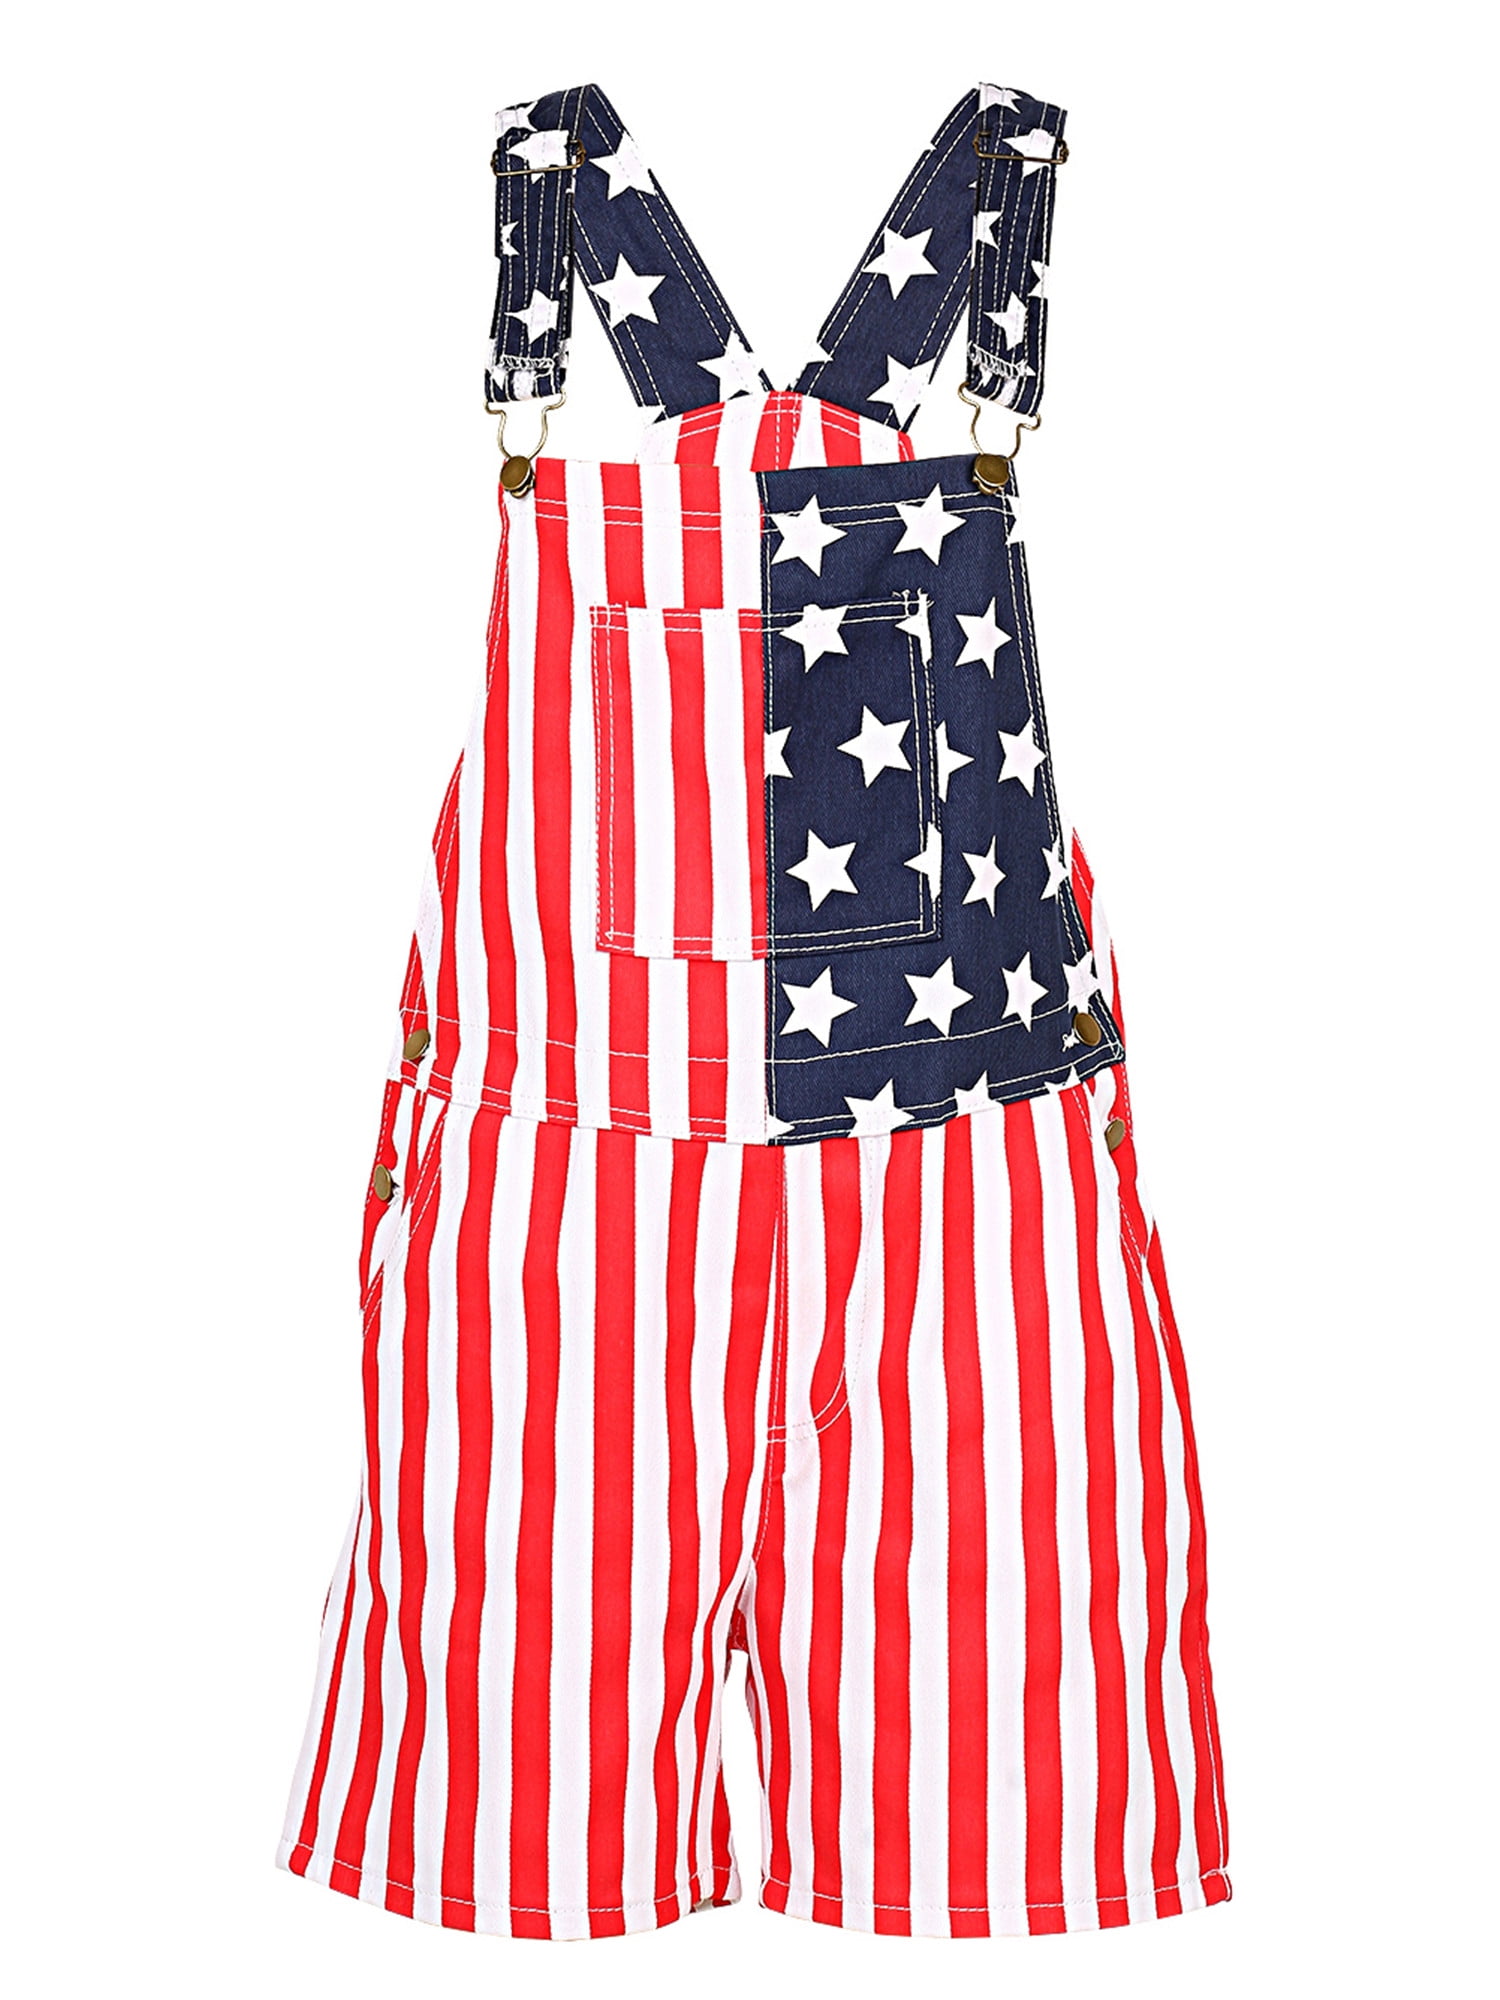 Aunavey American Flag Overalls Denim Bib Shorts for Men Women Jumpsuit ...